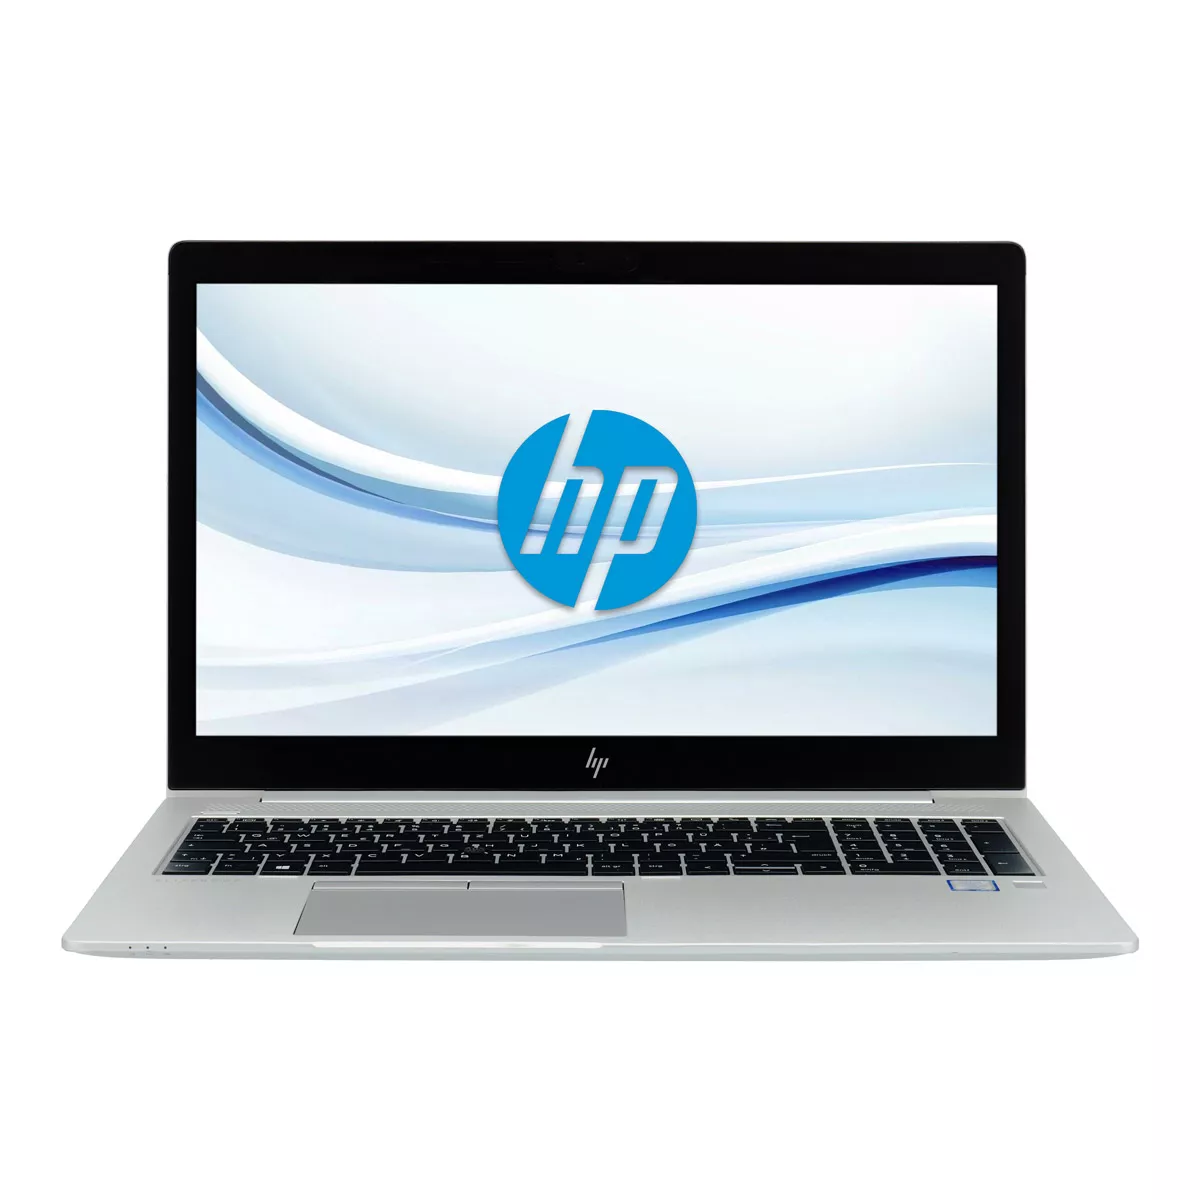 HP EliteBook 850 G5 Core i5 8250U Full-HD 8 GB DDR4 240 GB M.2 SSD Webcam B